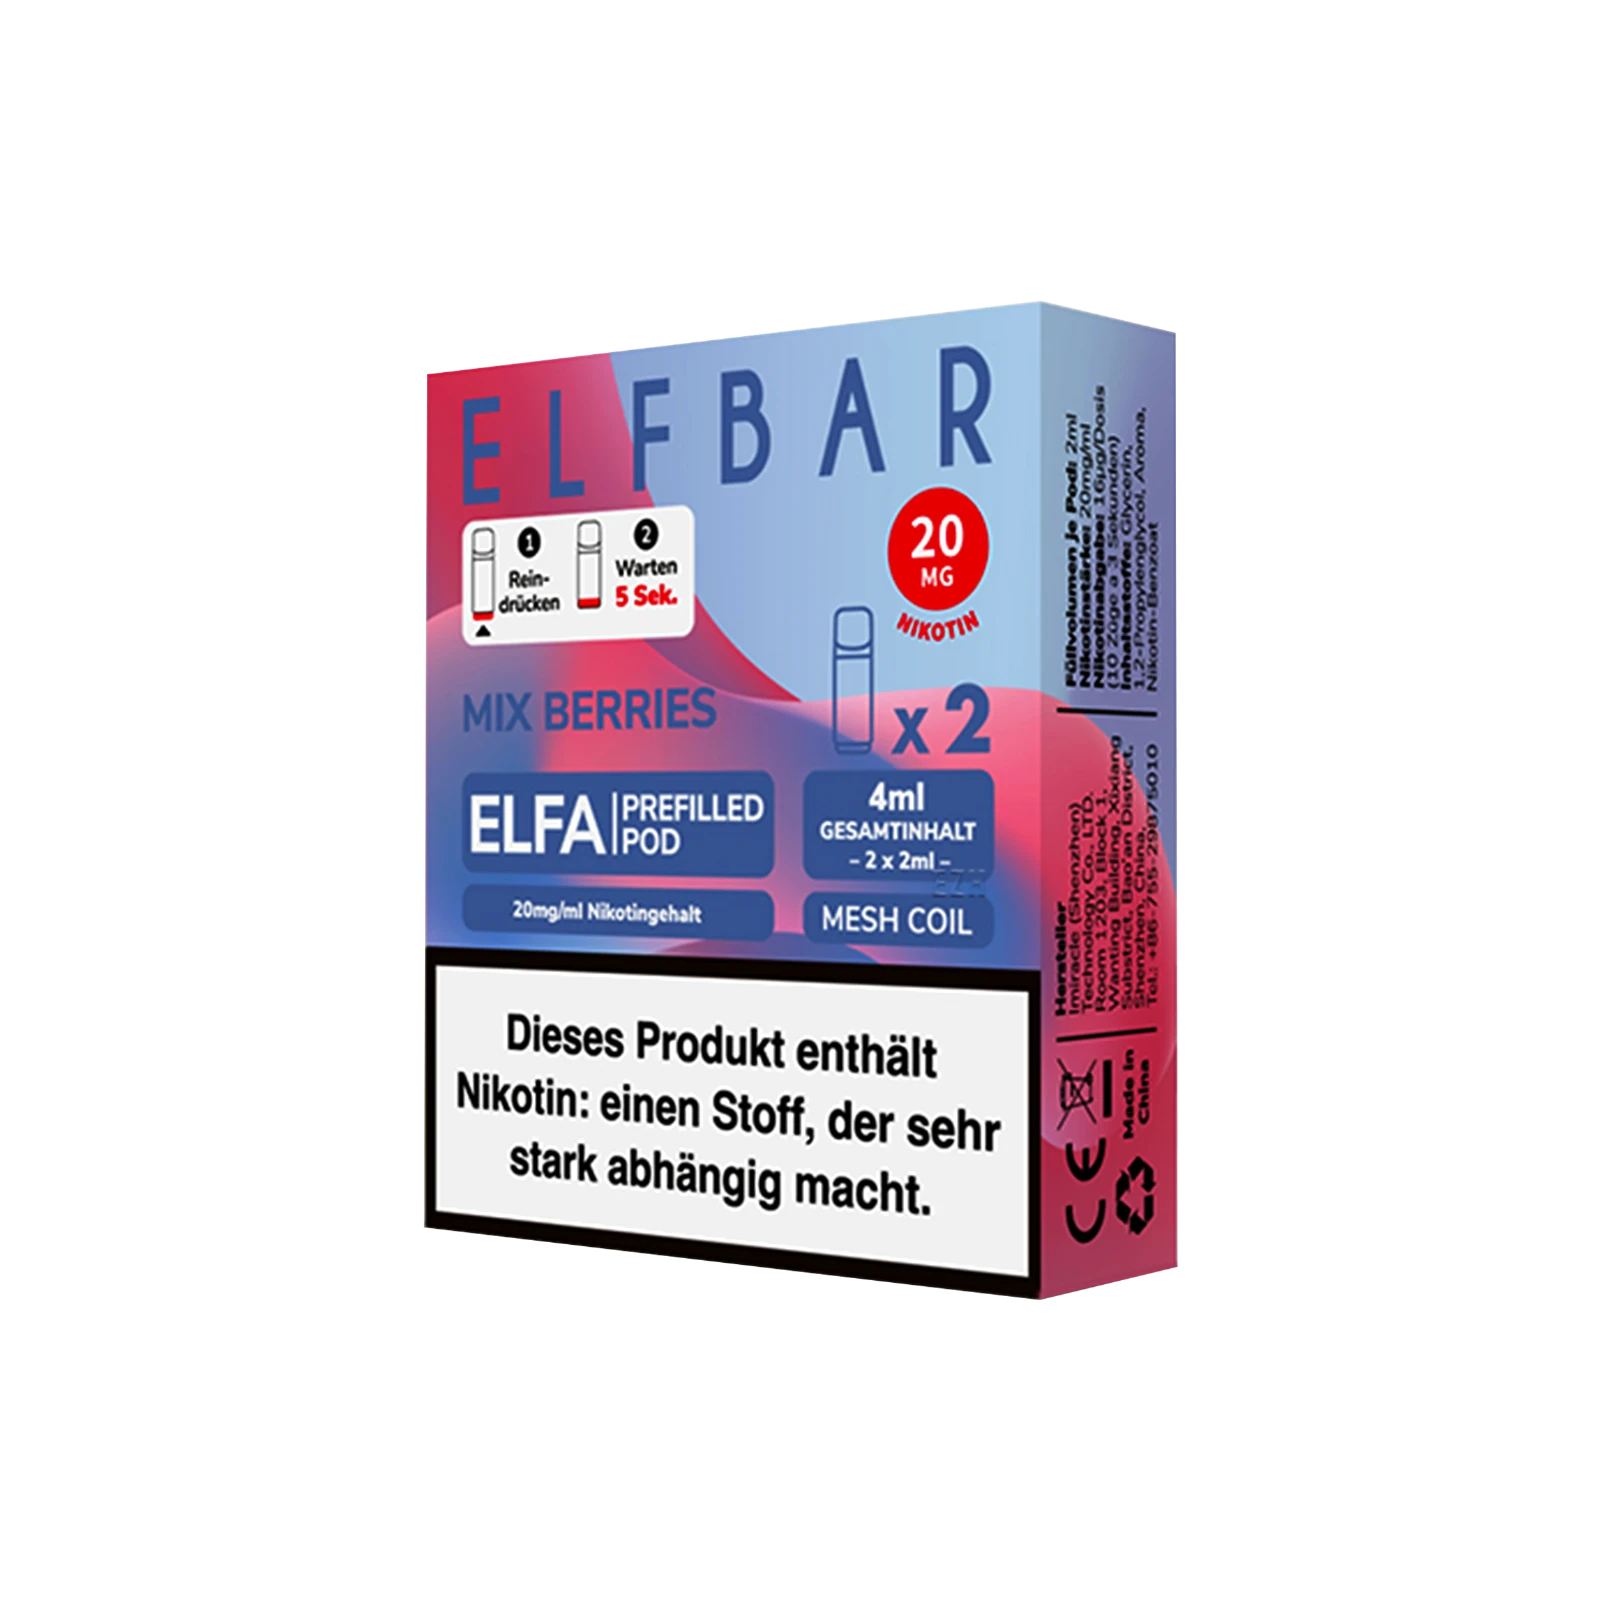 Elf Bar ELFA CP Prefilled Pod Mix Berries | Neue Liquid Sorten